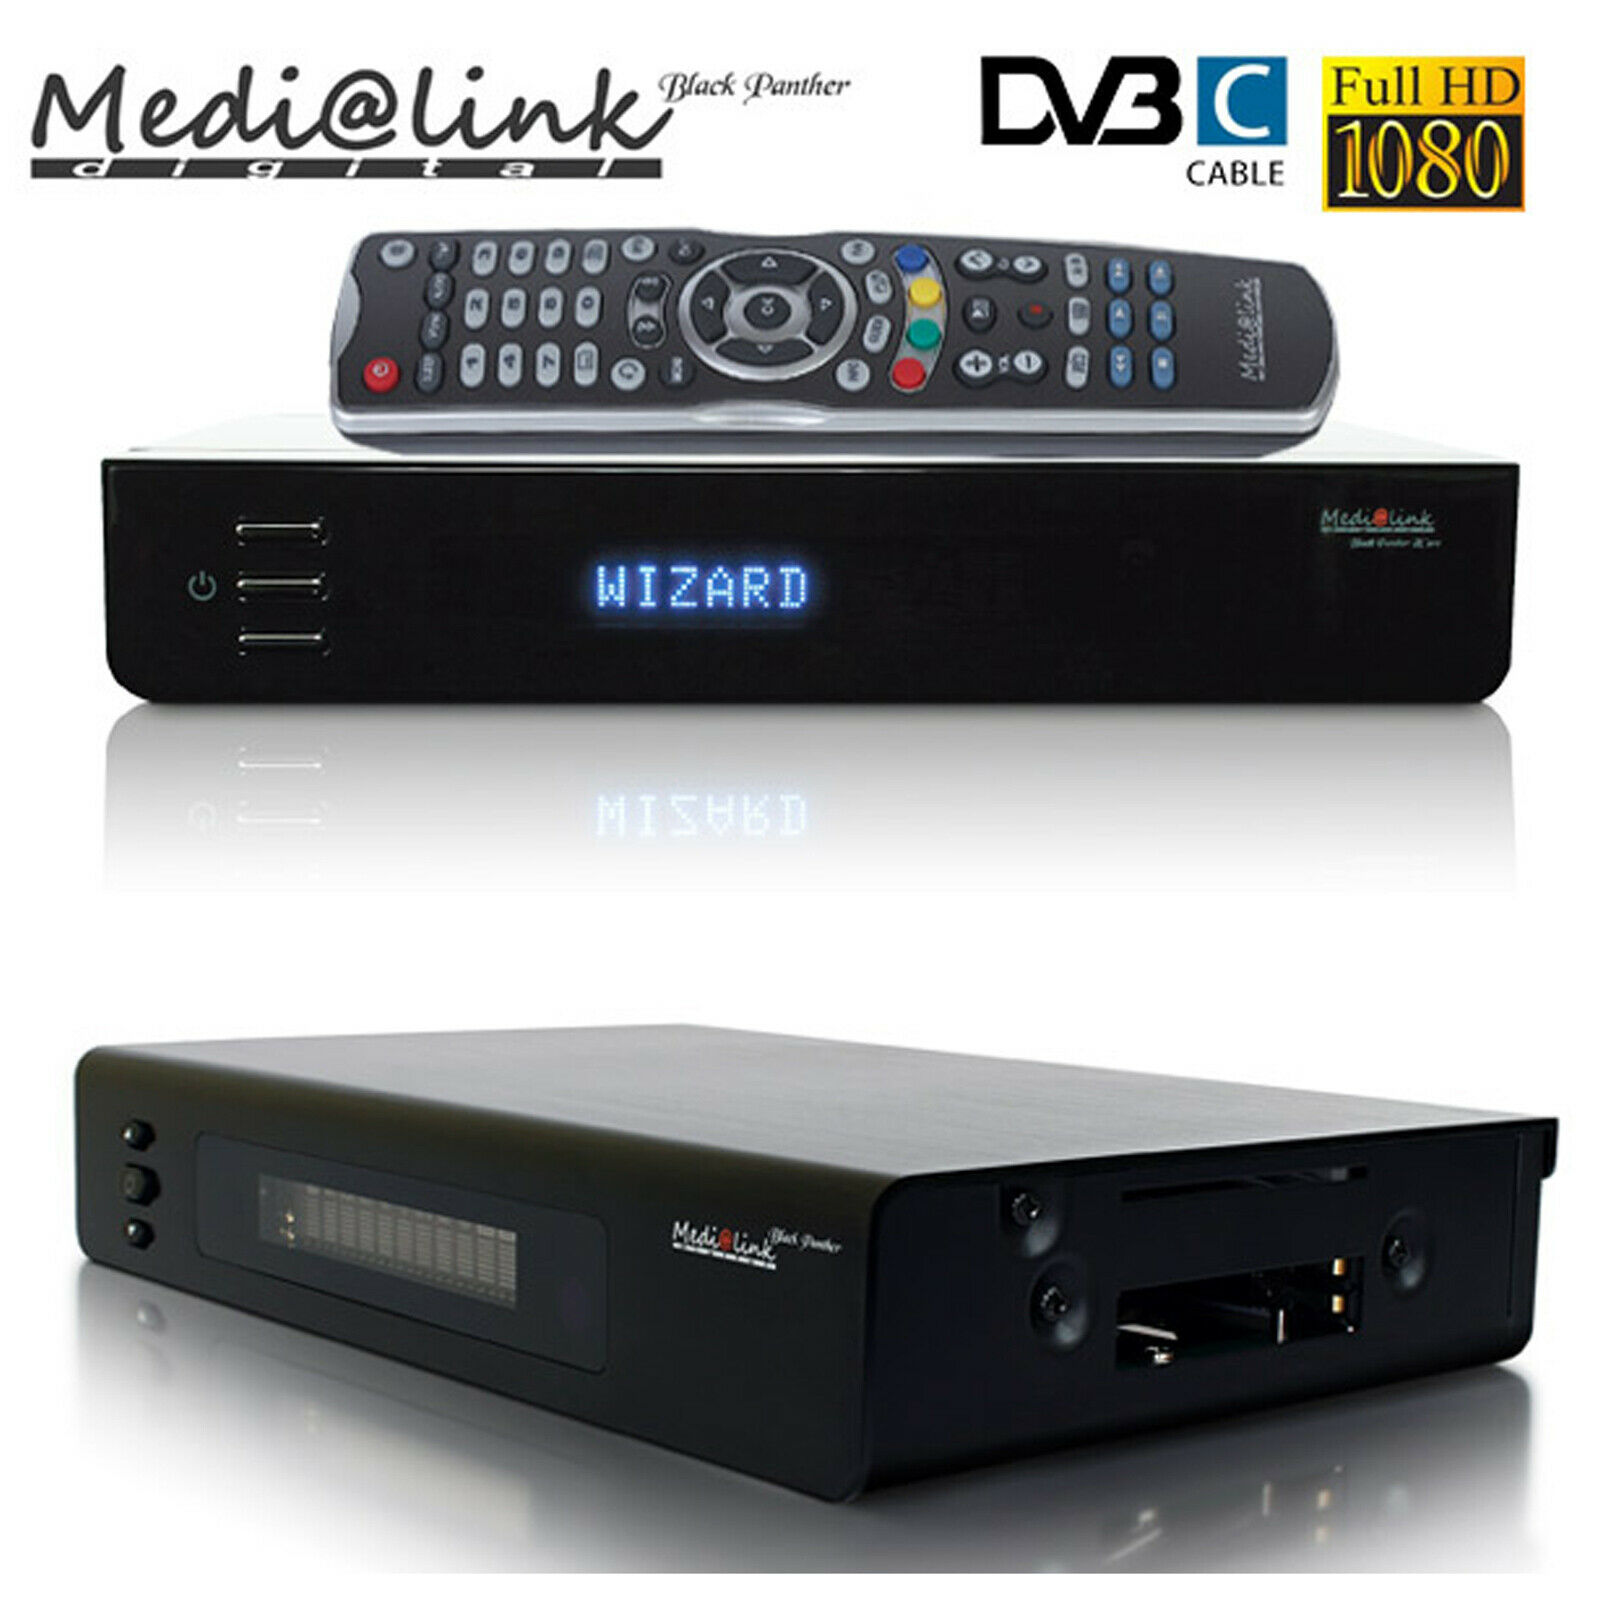 Medialink Black Panther 1xCI 1xCX DVB-C Kabel Receiver ETHERNET USB HDMI SCART